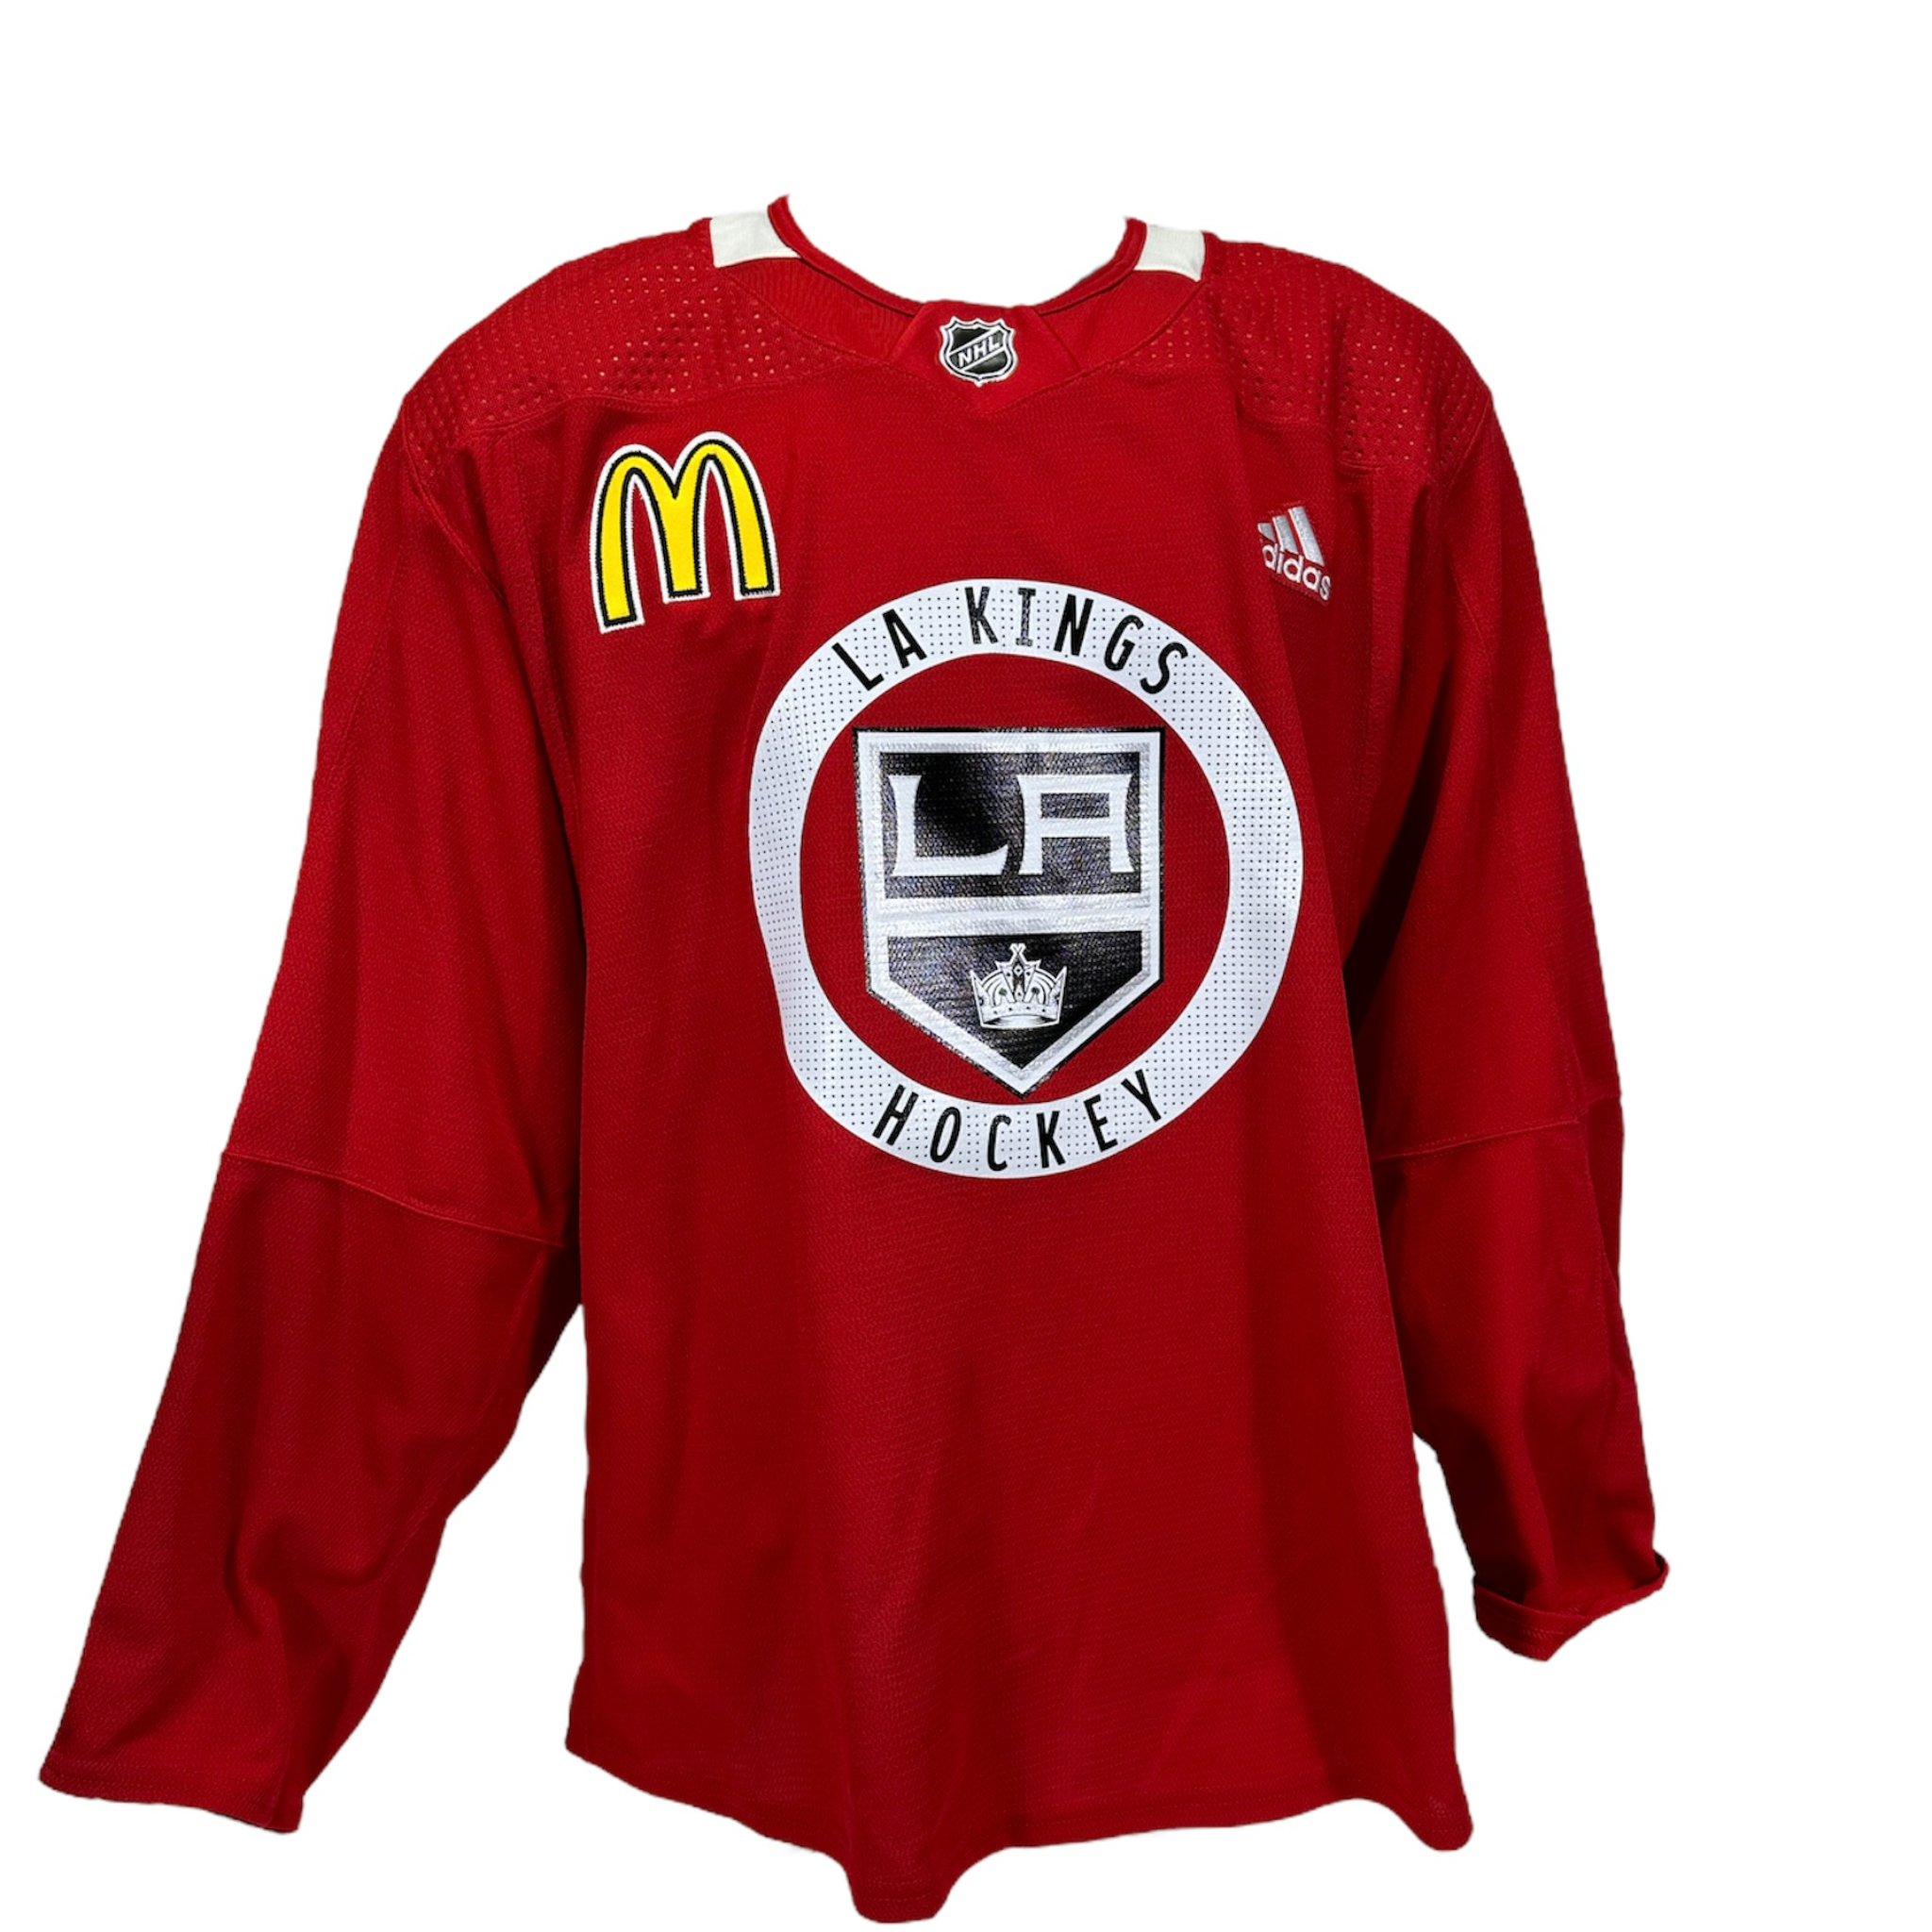 Authentic Adidas Pro NHL LA KINGS Jersey